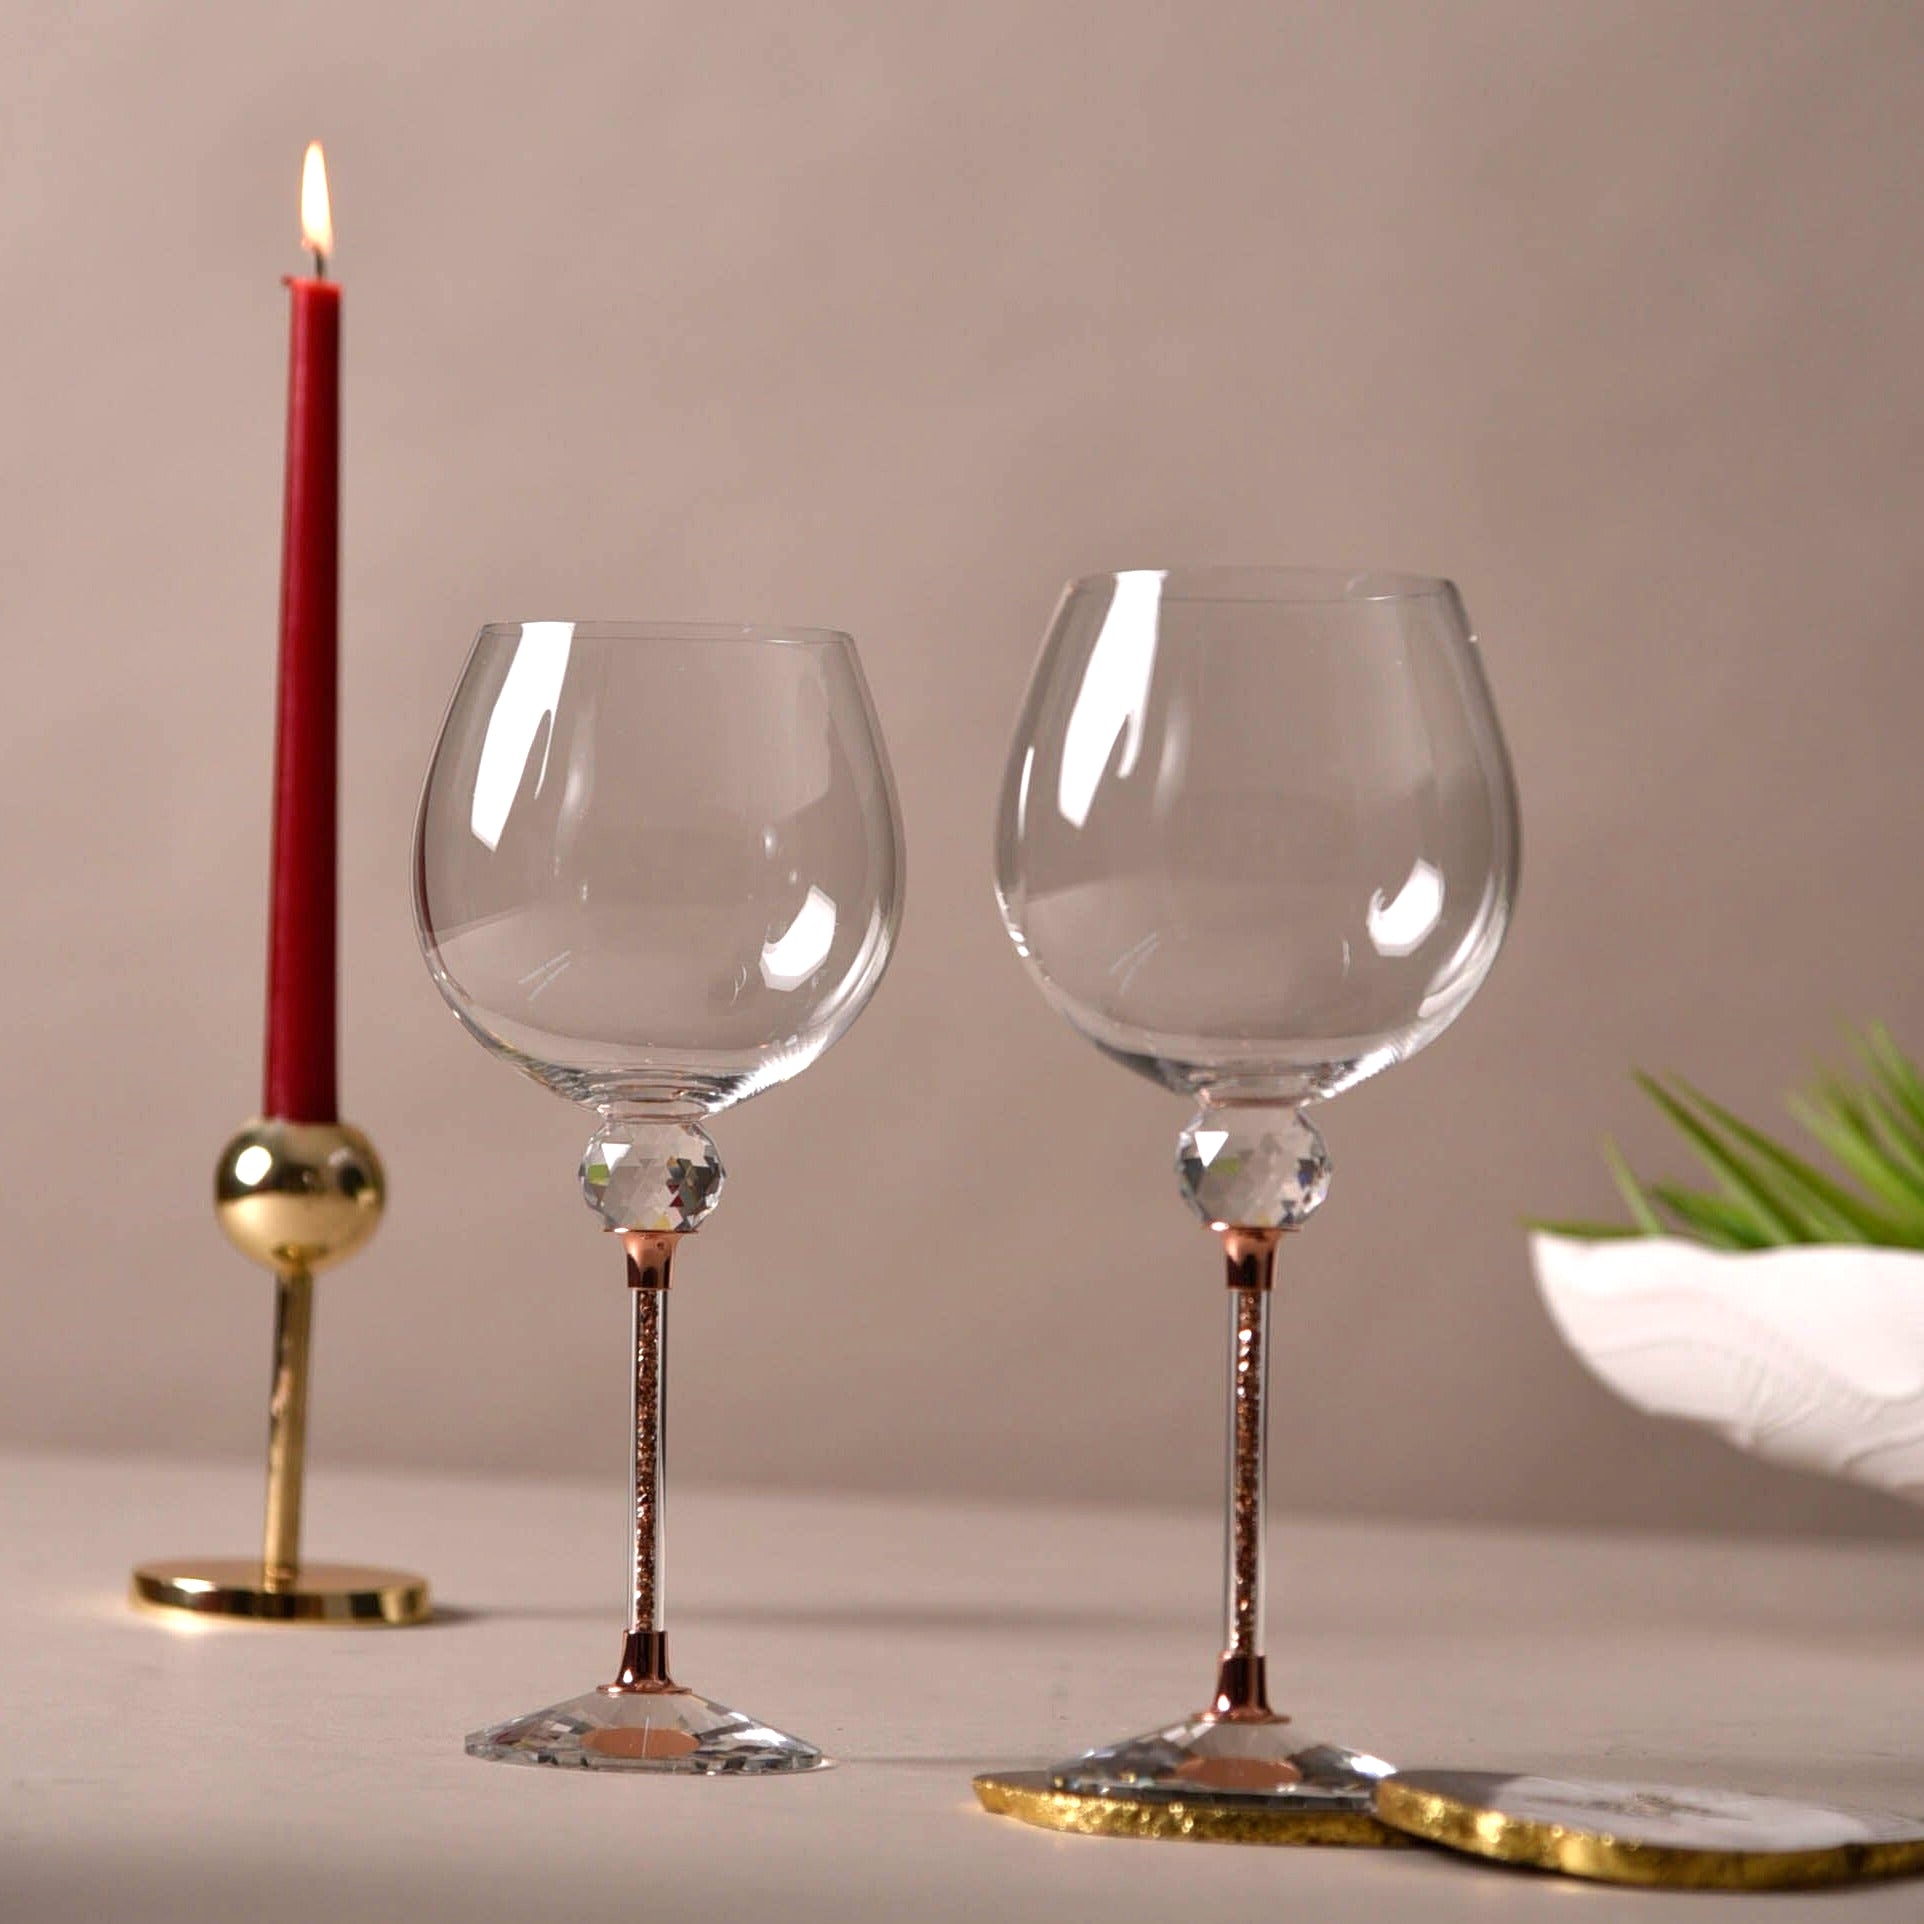 Caelus Rose Gold Crystal Wine Glasses (Set of 4)